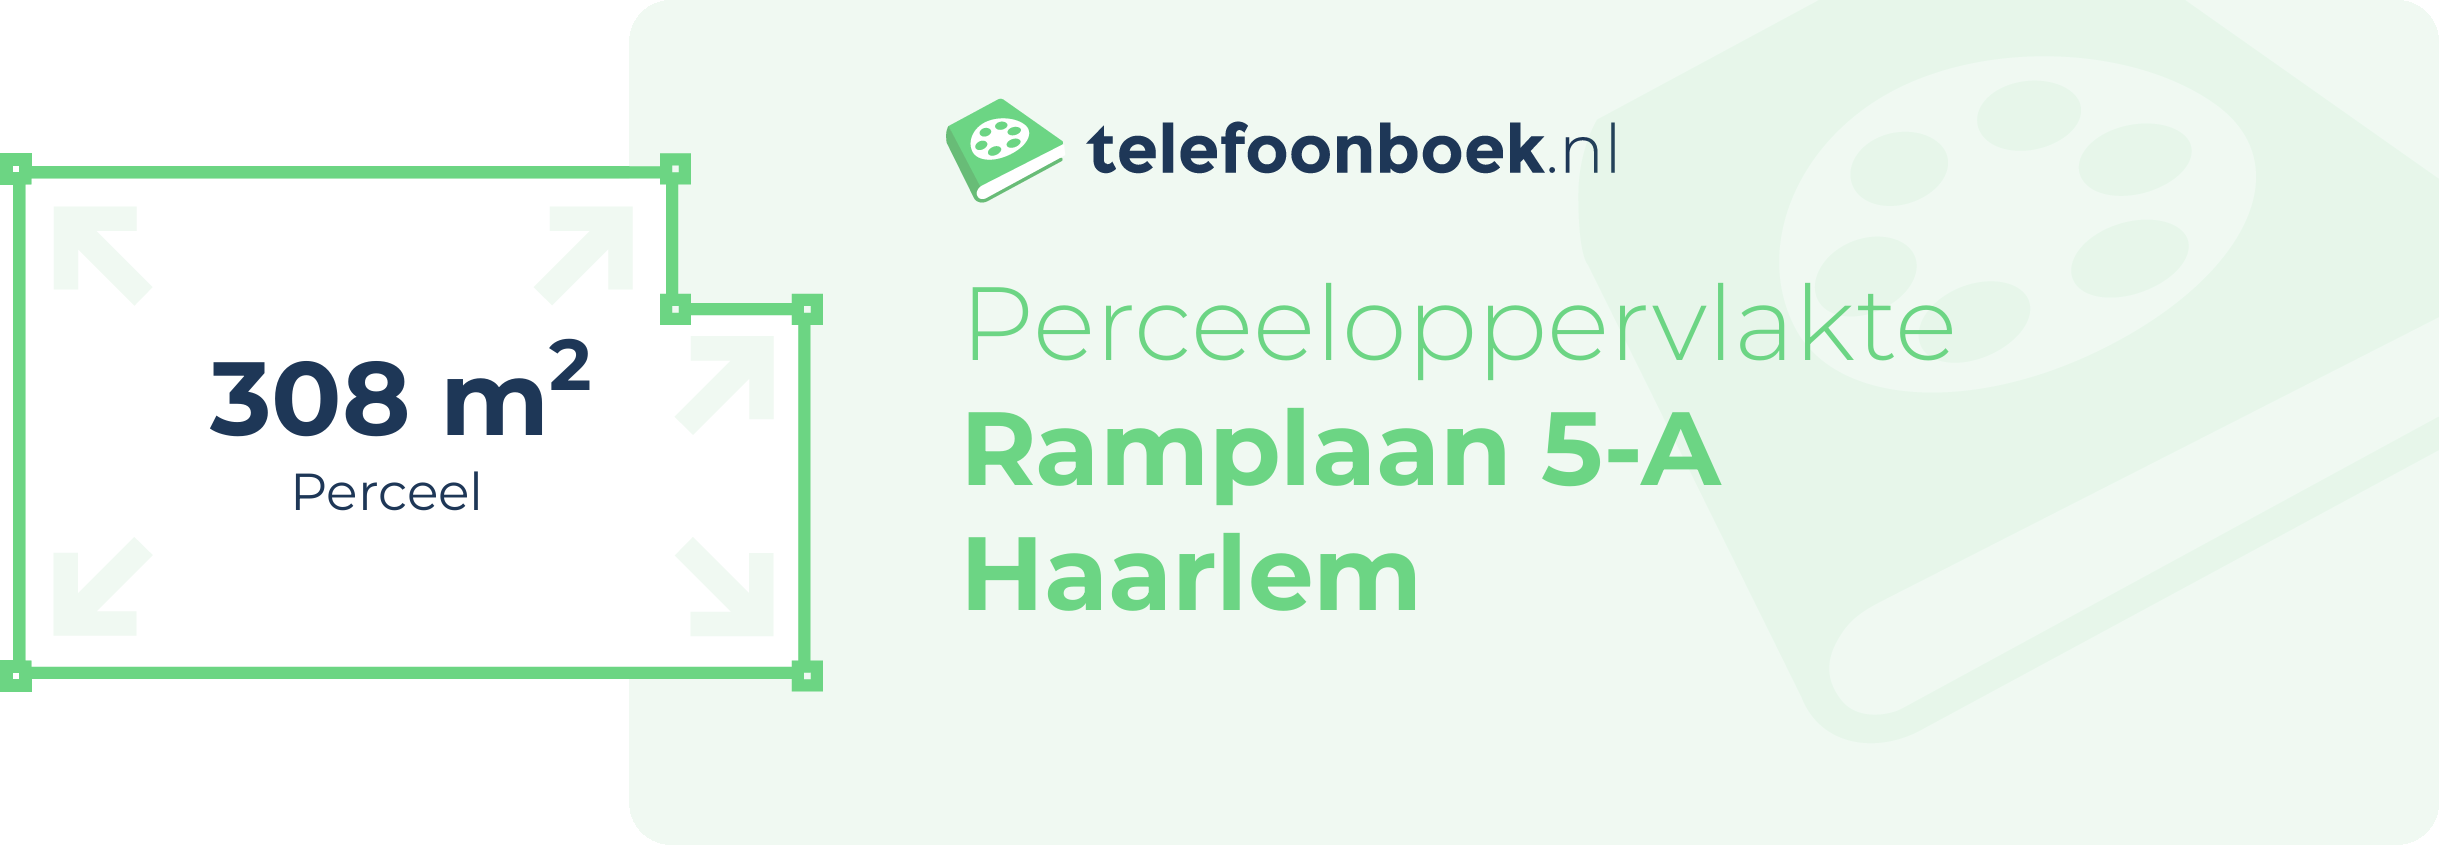 Perceeloppervlakte Ramplaan 5-A Haarlem